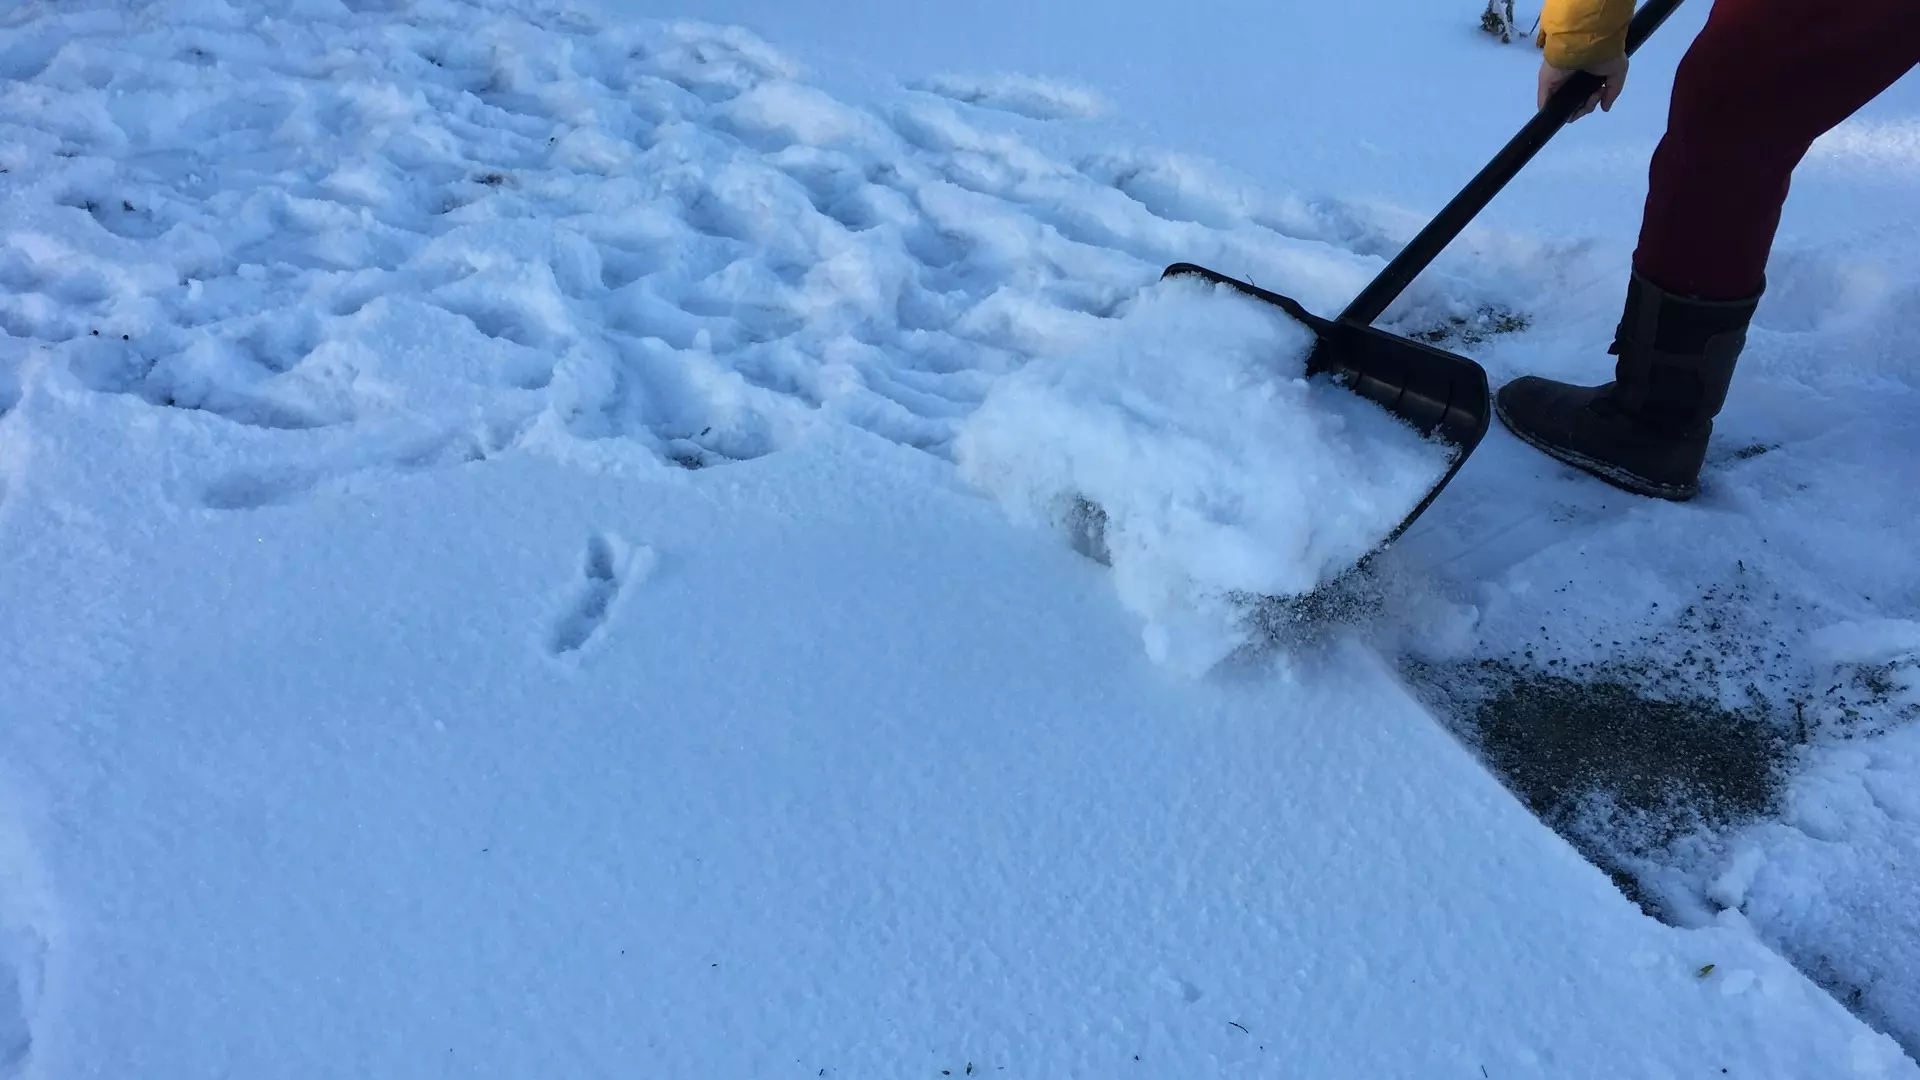 186 нарушений уборки снега во дворах выявили в Ижевске